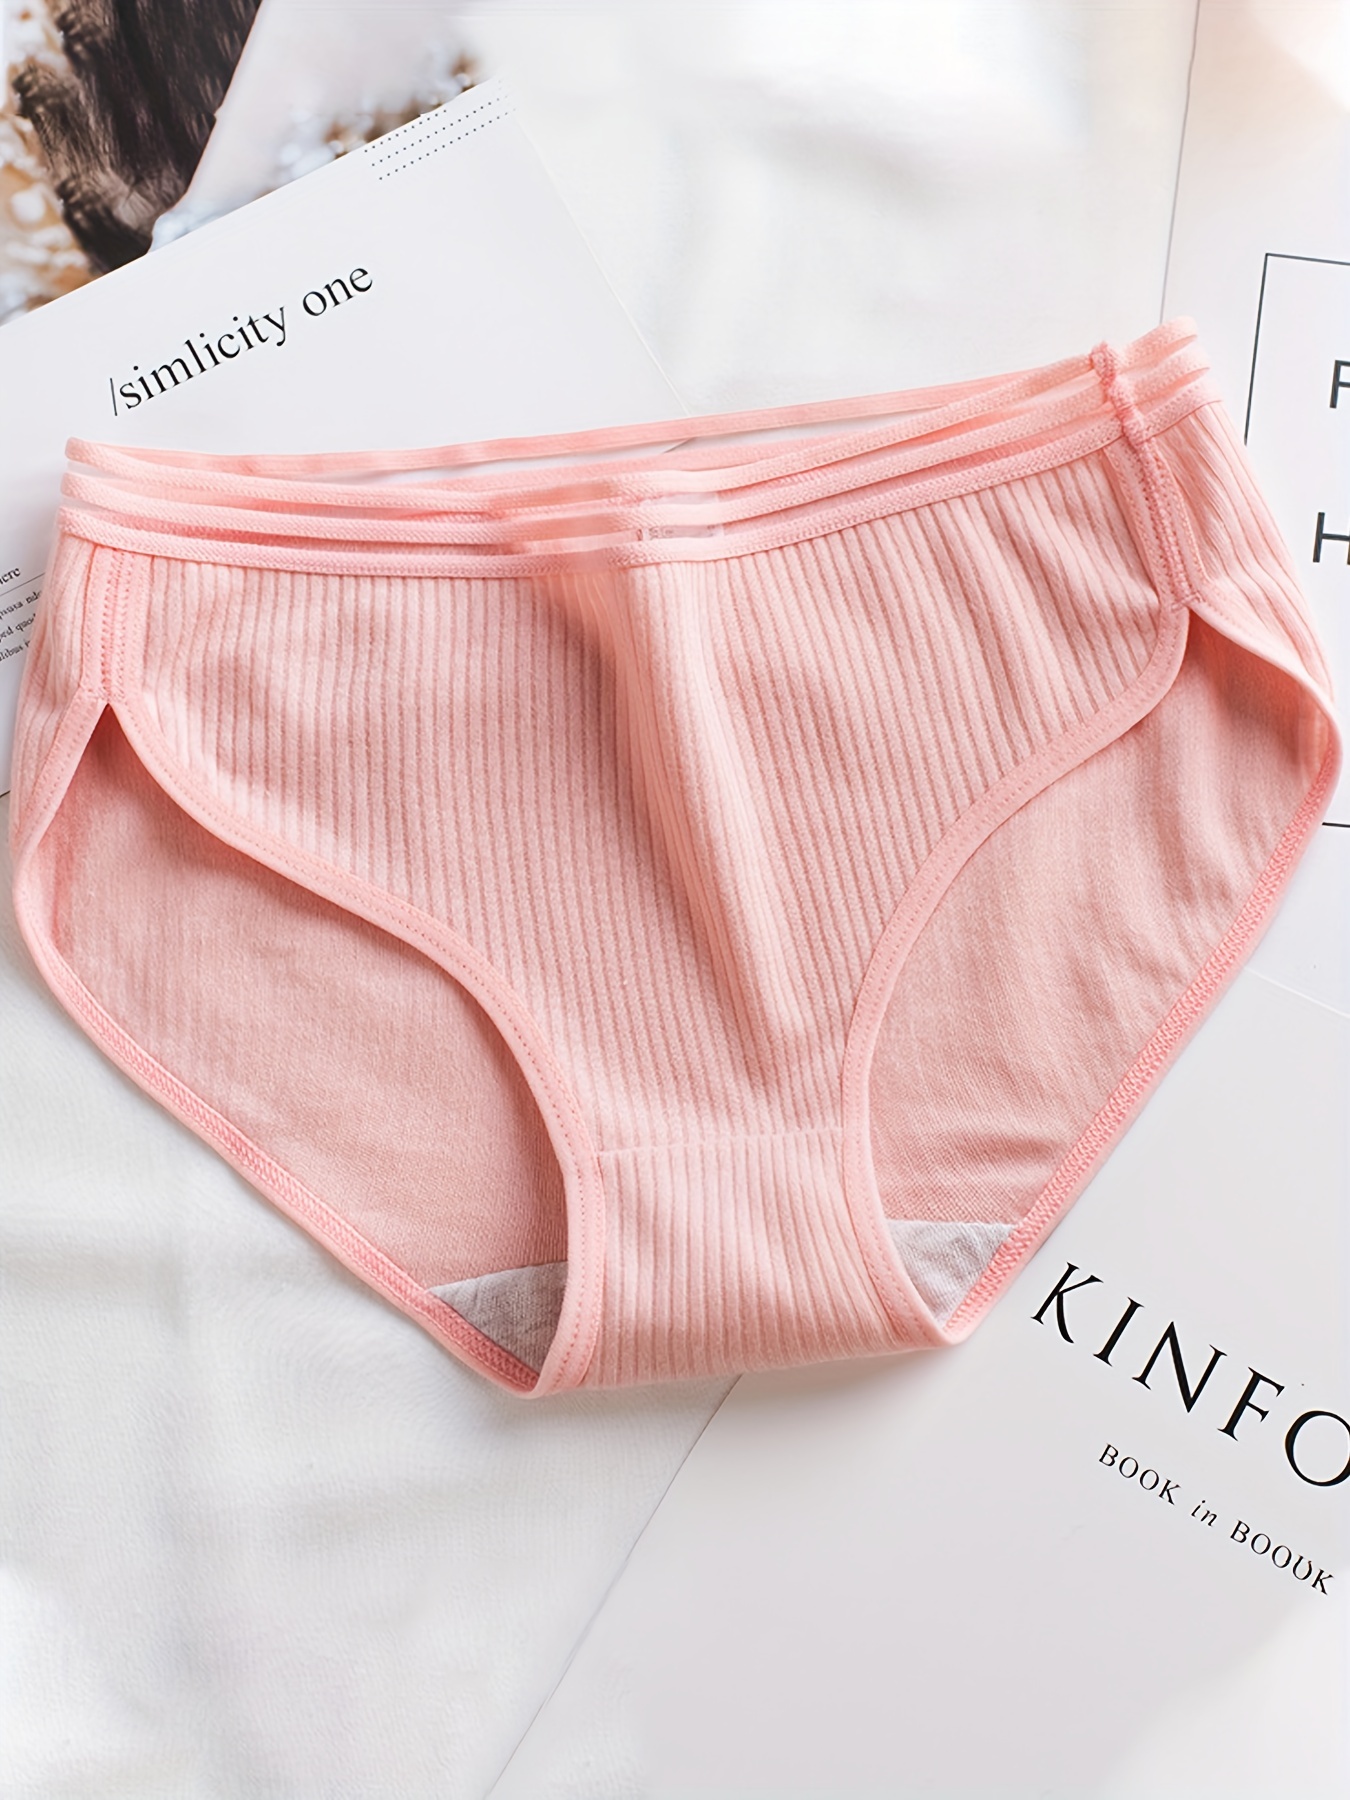 New Women's Threaded Cotton Panties Japanese Style Girls Briefs